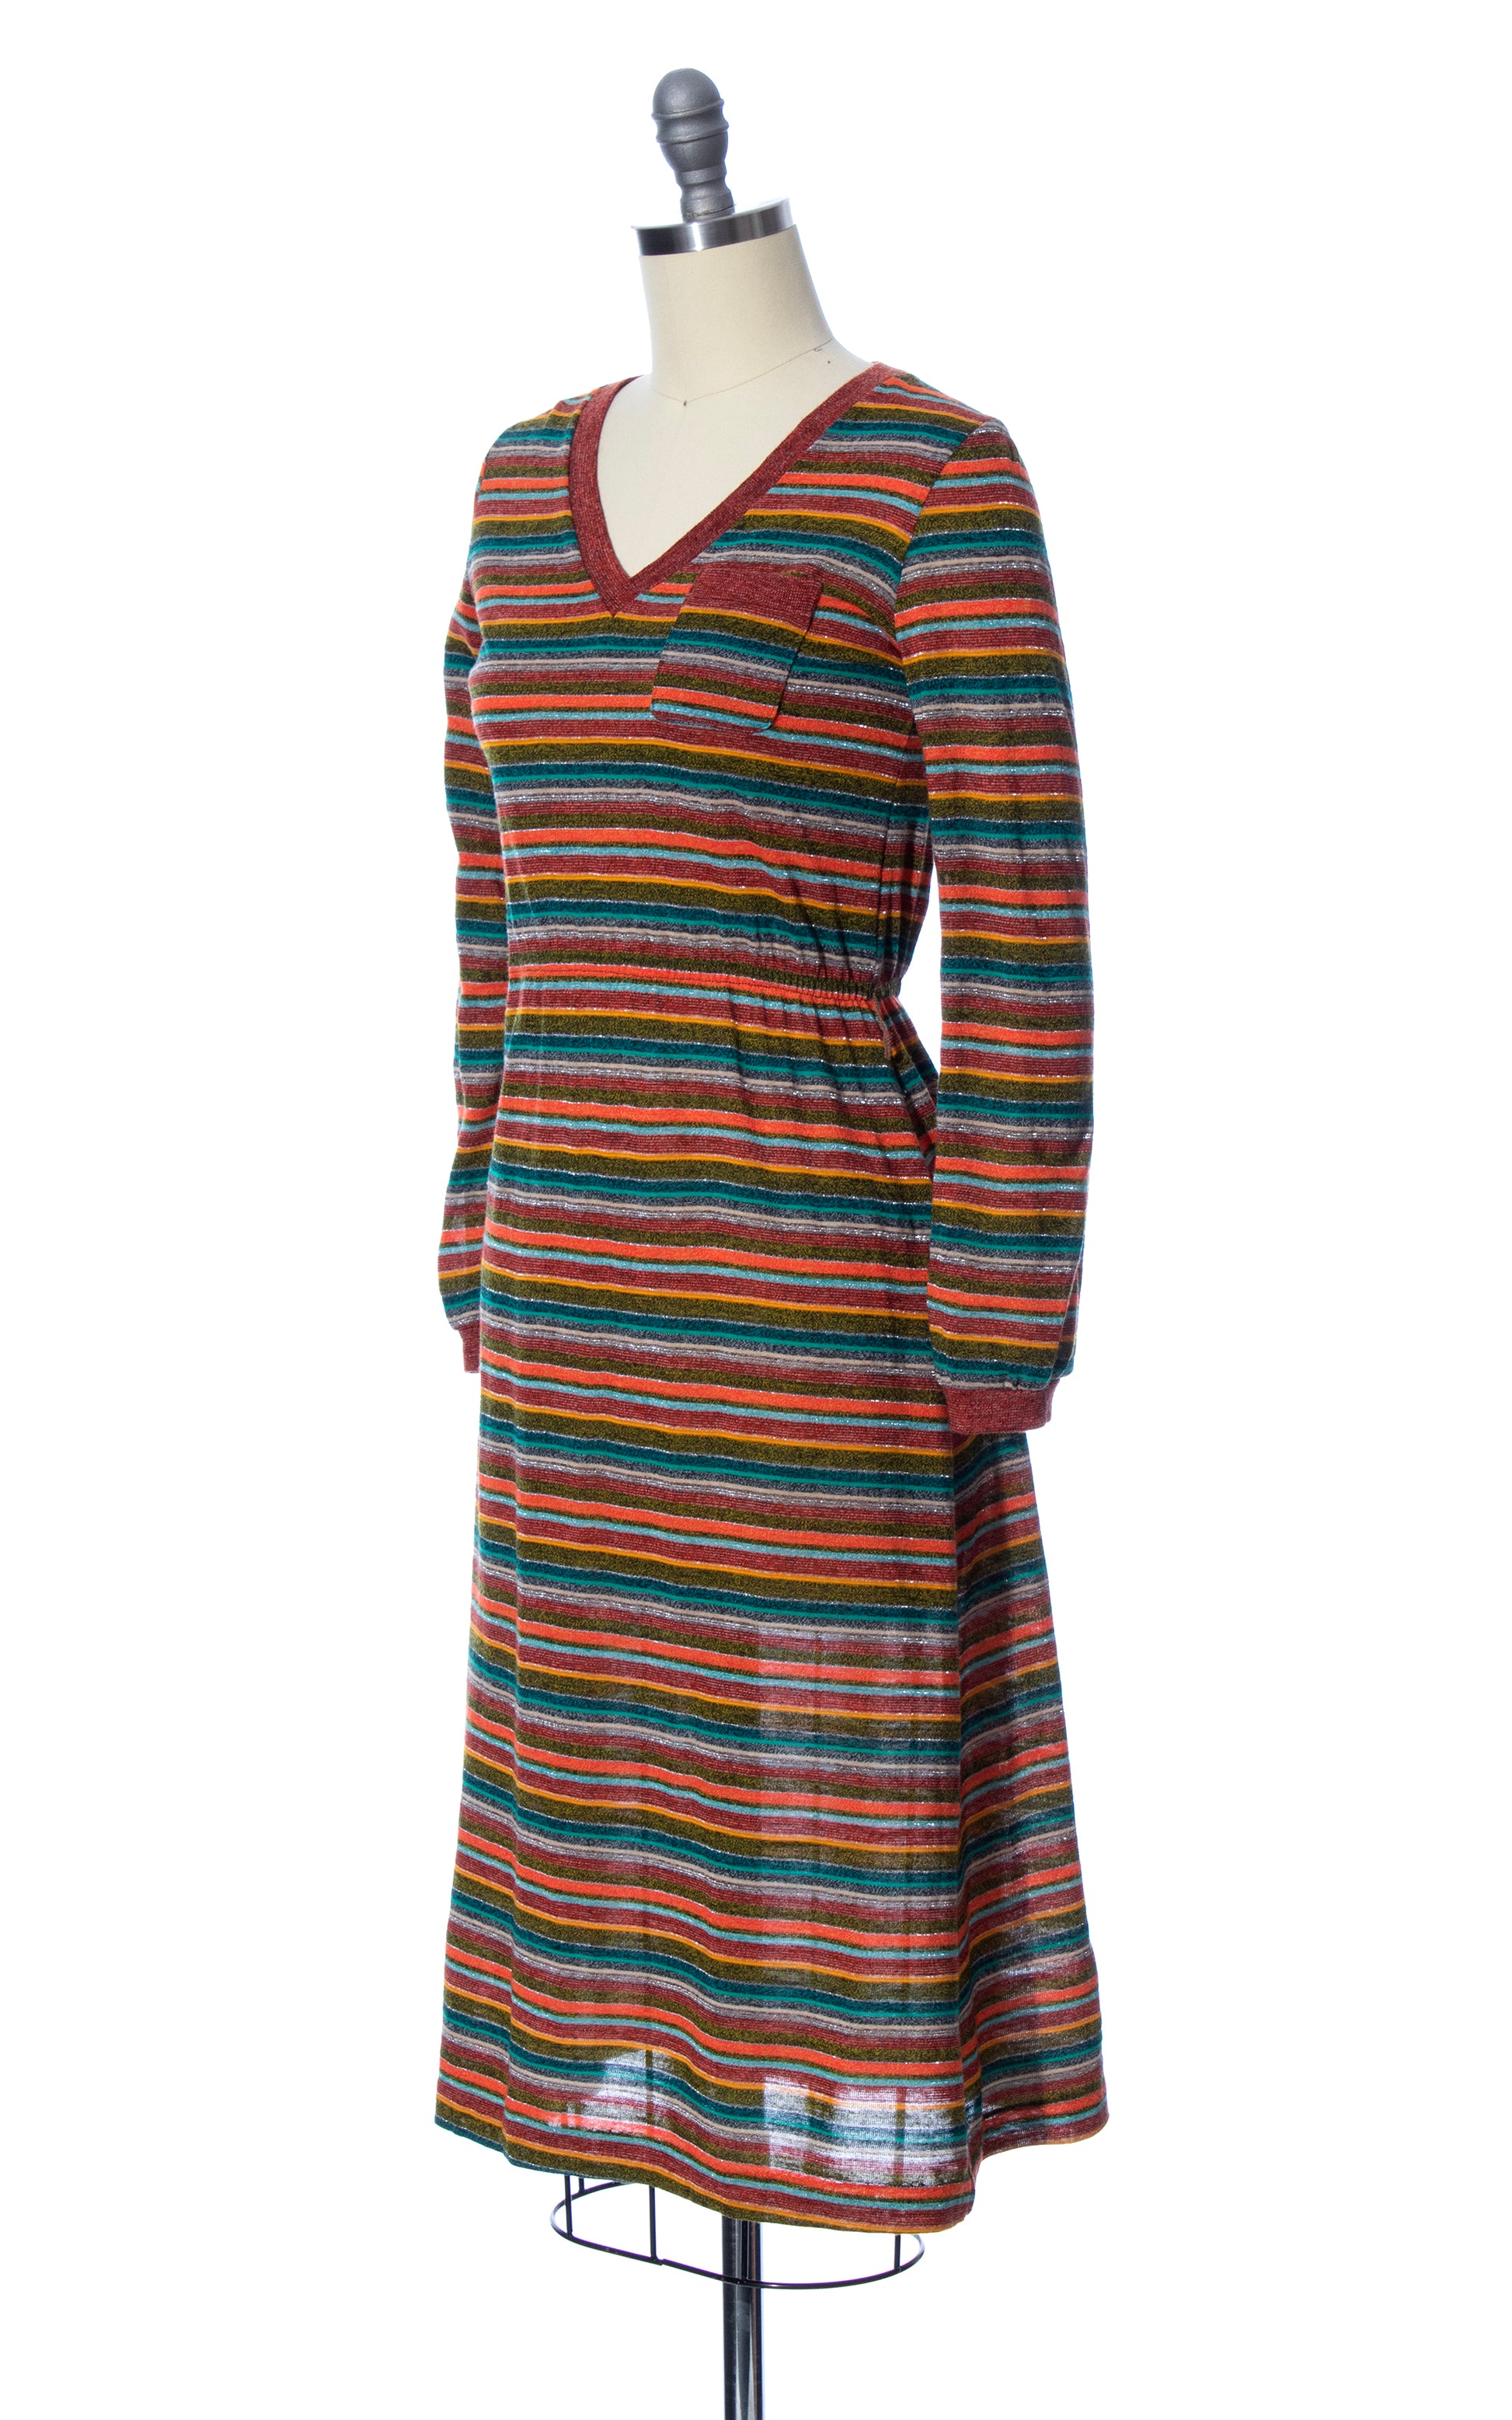 Vintage 80s 1970s Metallic Striped Jersey Knit Sweater Dress Birthday Life Vintage